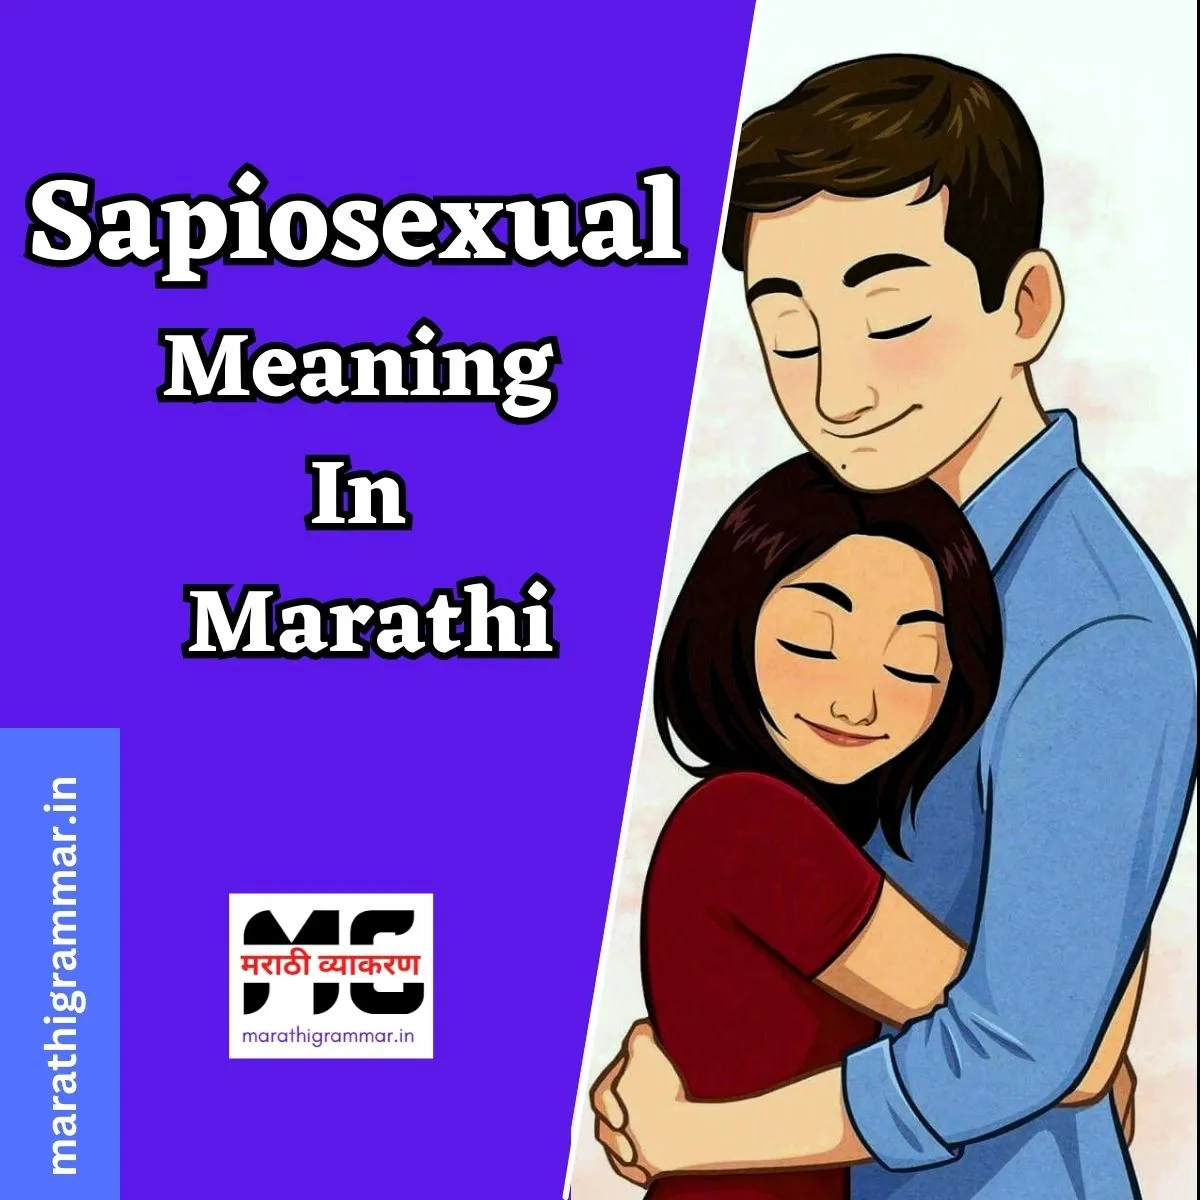 Sapiosexual Meaning In Marathi। सेपिओसेक्सुअल म्हणजे काय ?